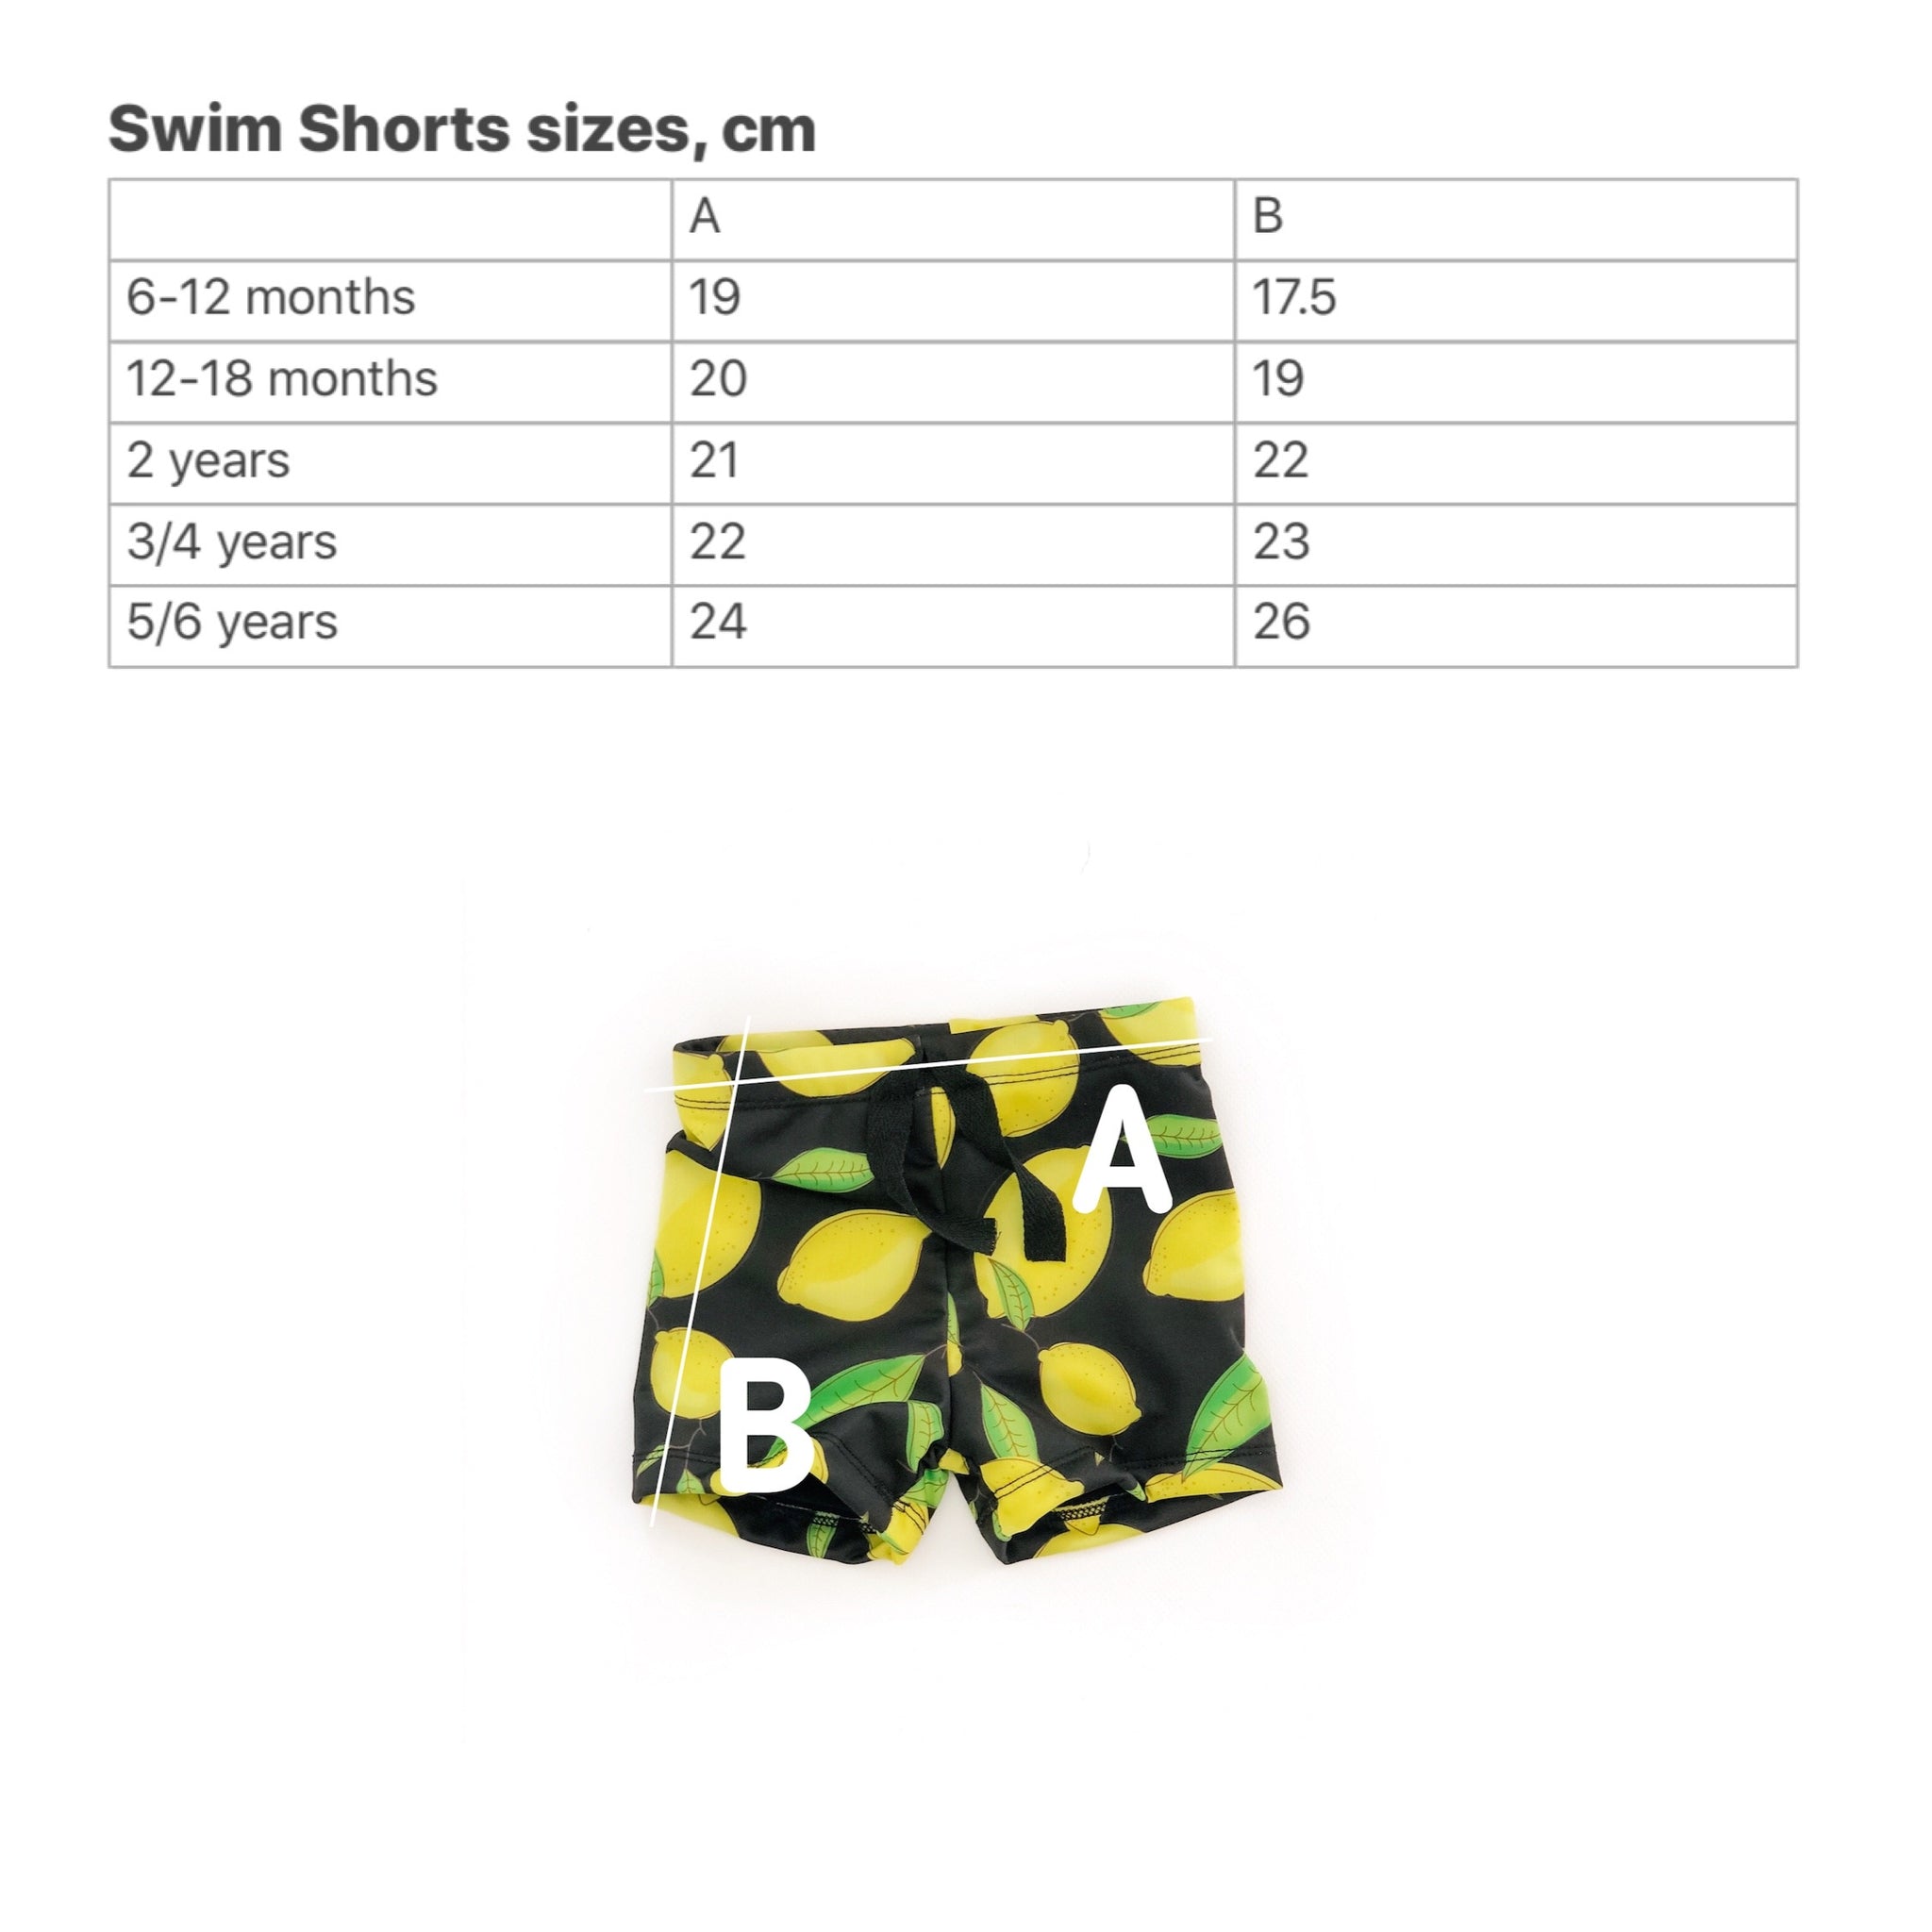 Swim shorts with Fruits